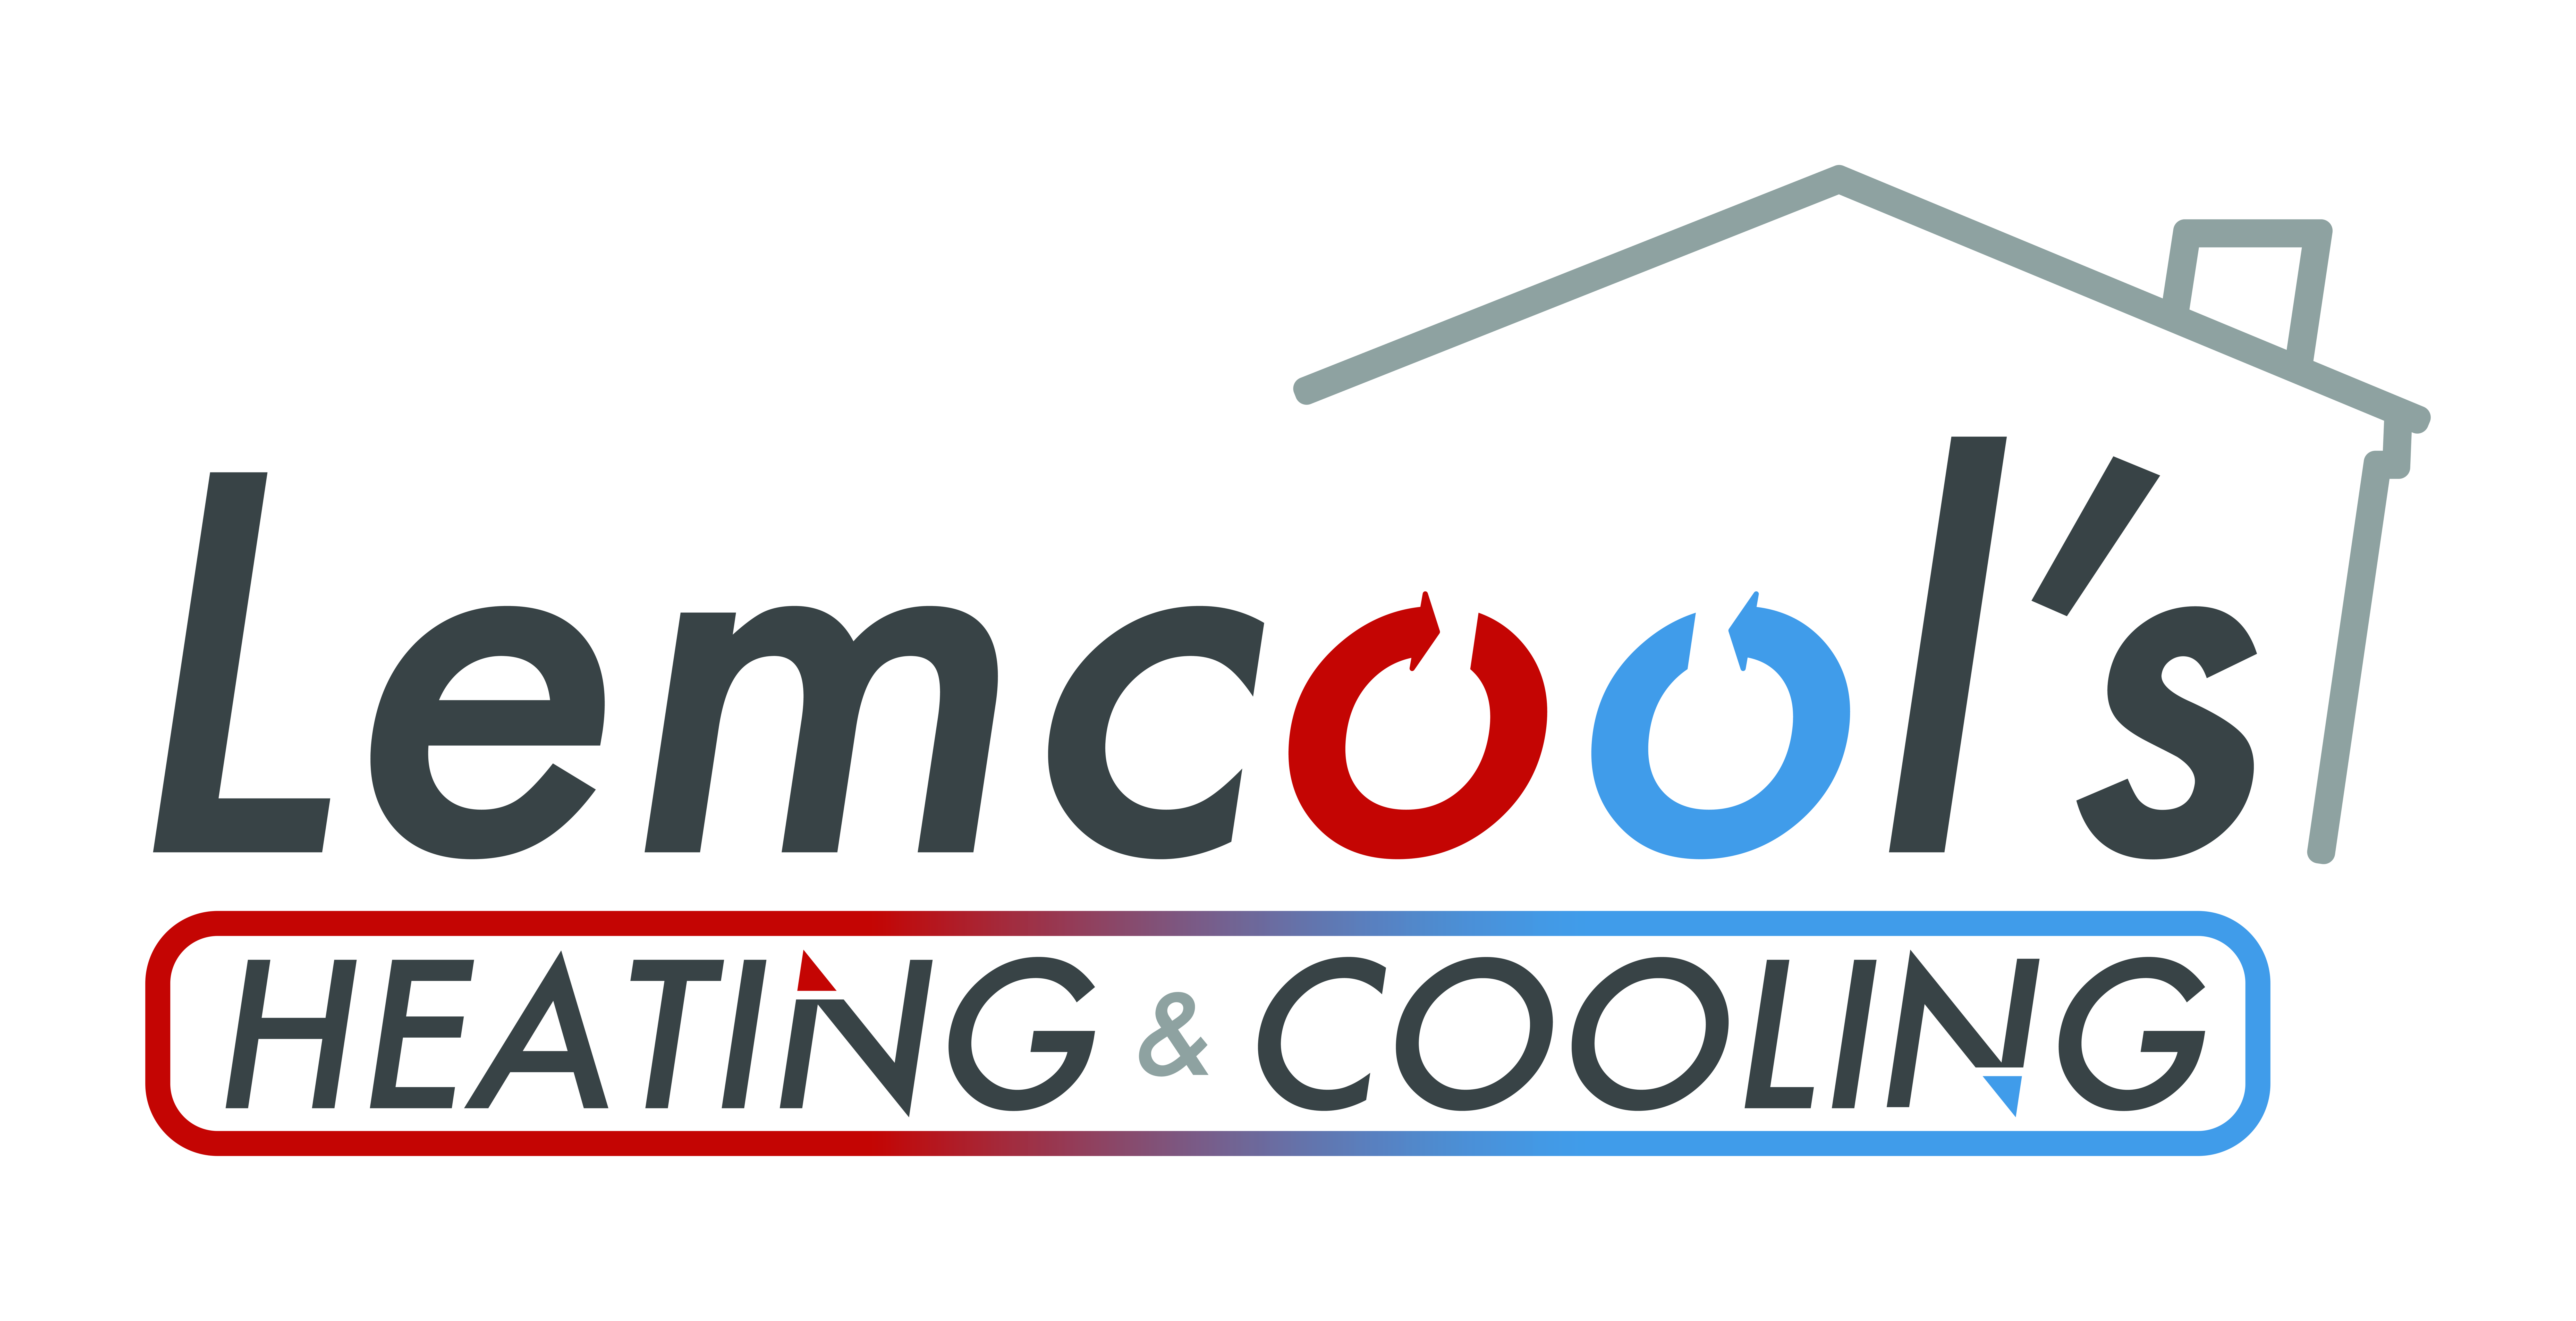 Lemcool's Heating & Cooling Logo